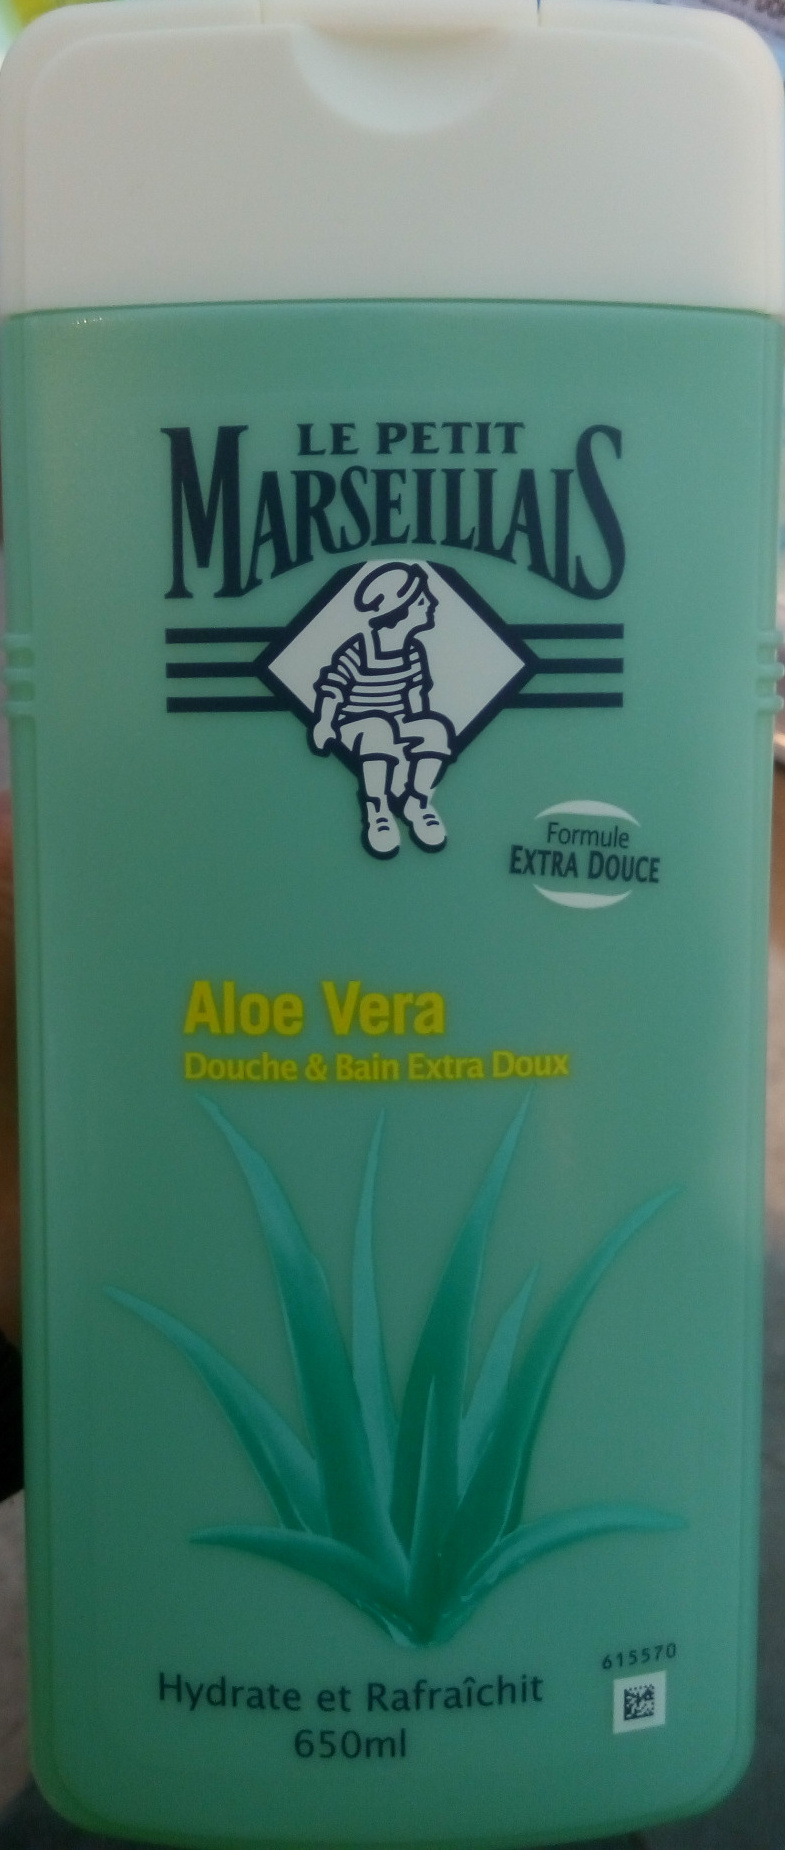 Douche et bain extra doux Aloe Vera - Product - fr